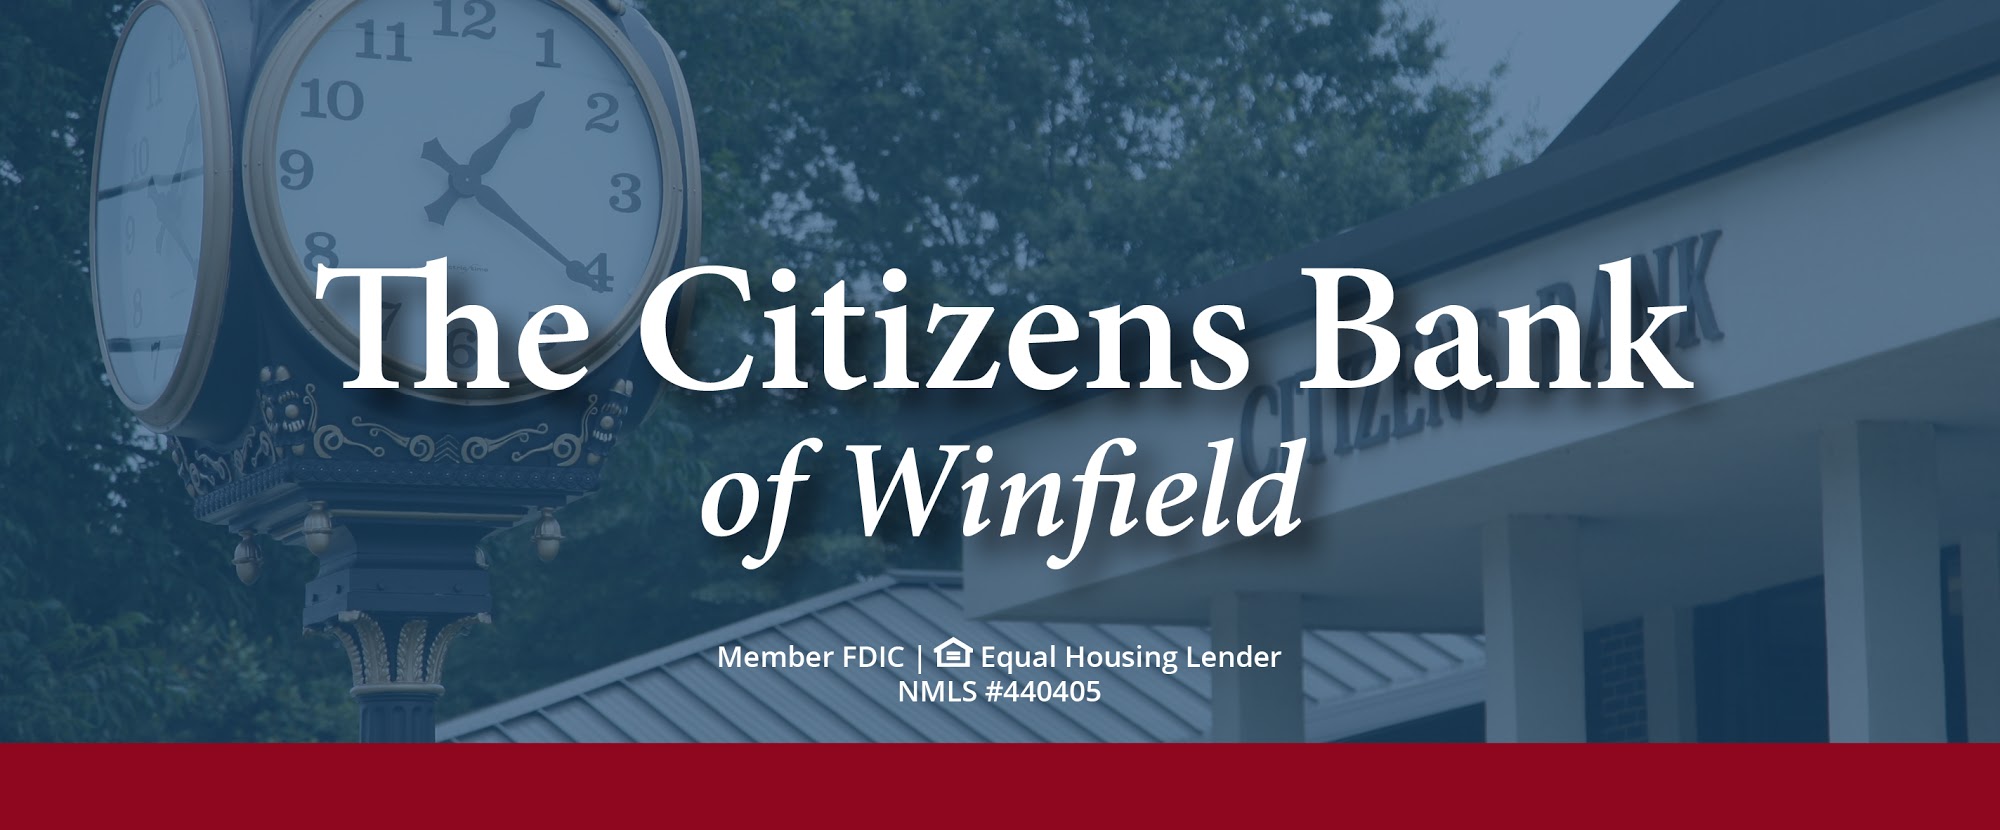 Citizens Bank of Winfield